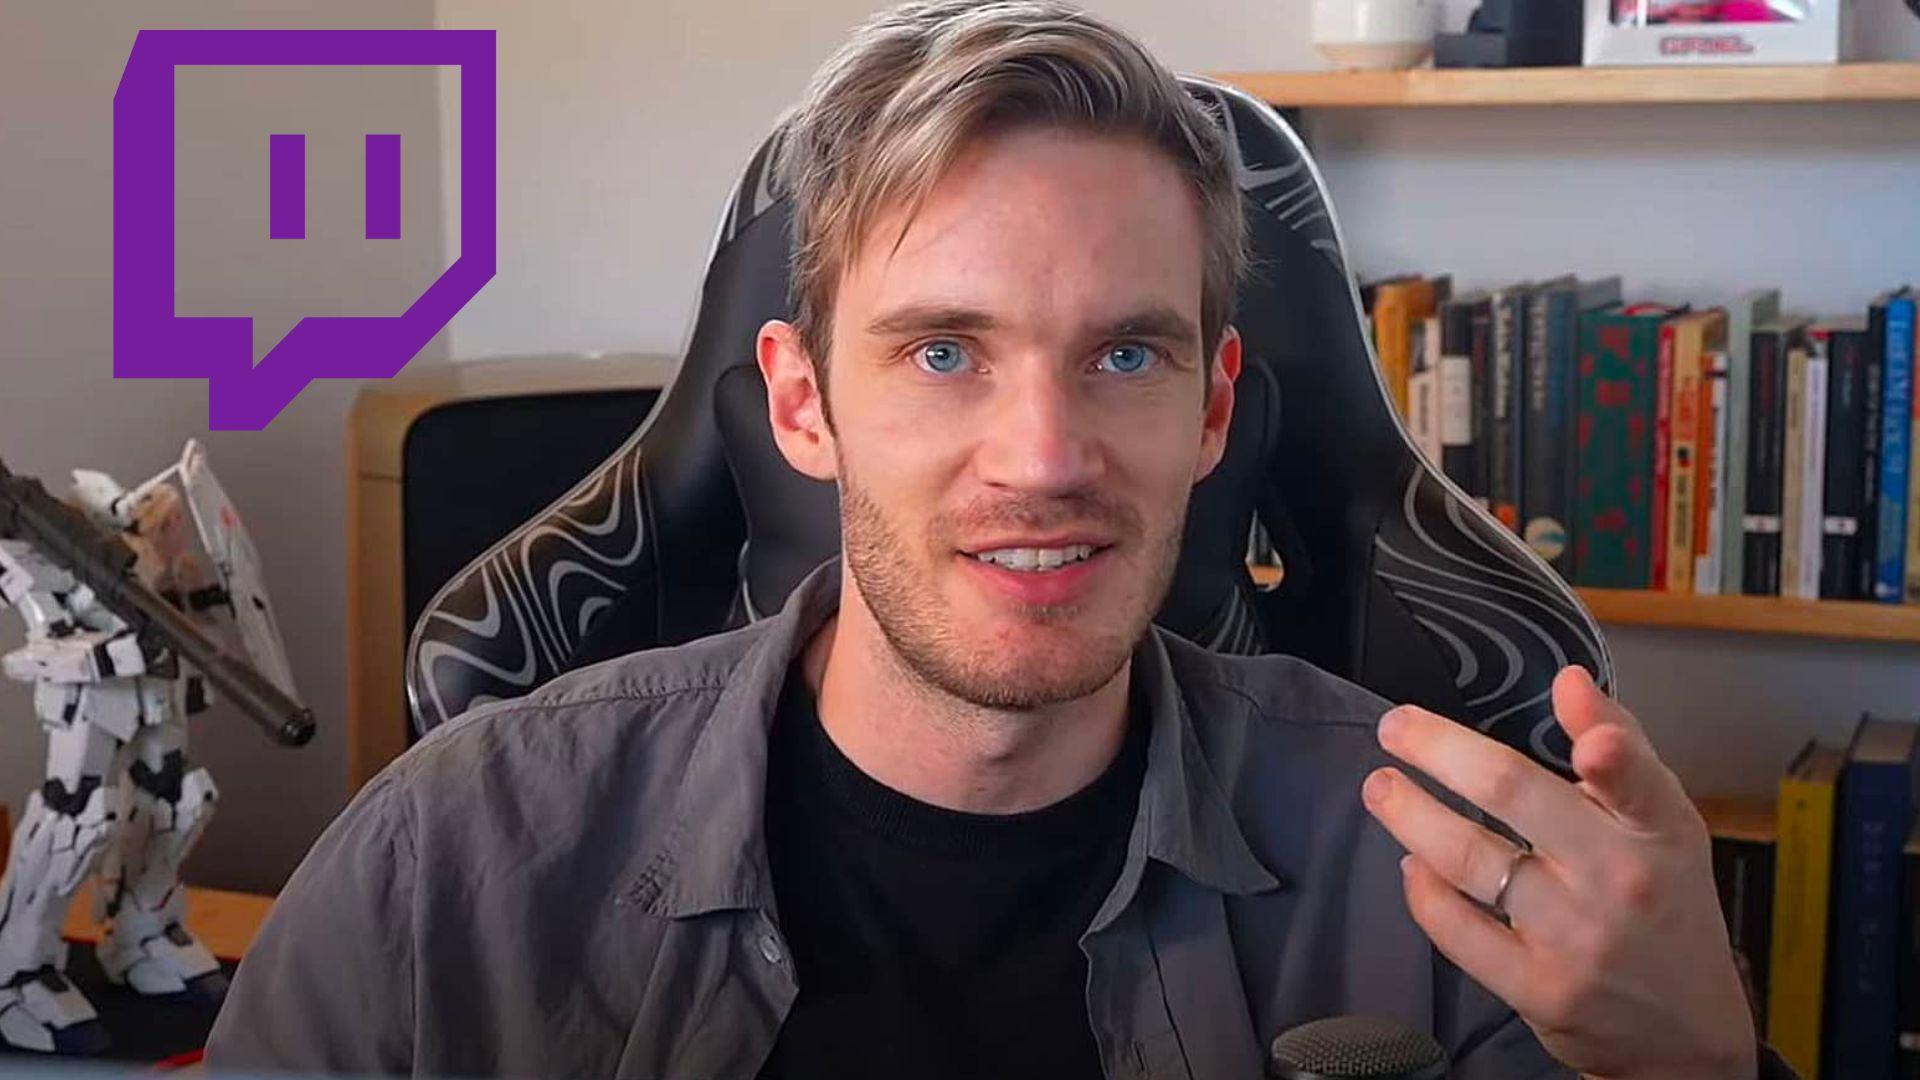 PewDiePie talking to camera with Twitch logo next to head